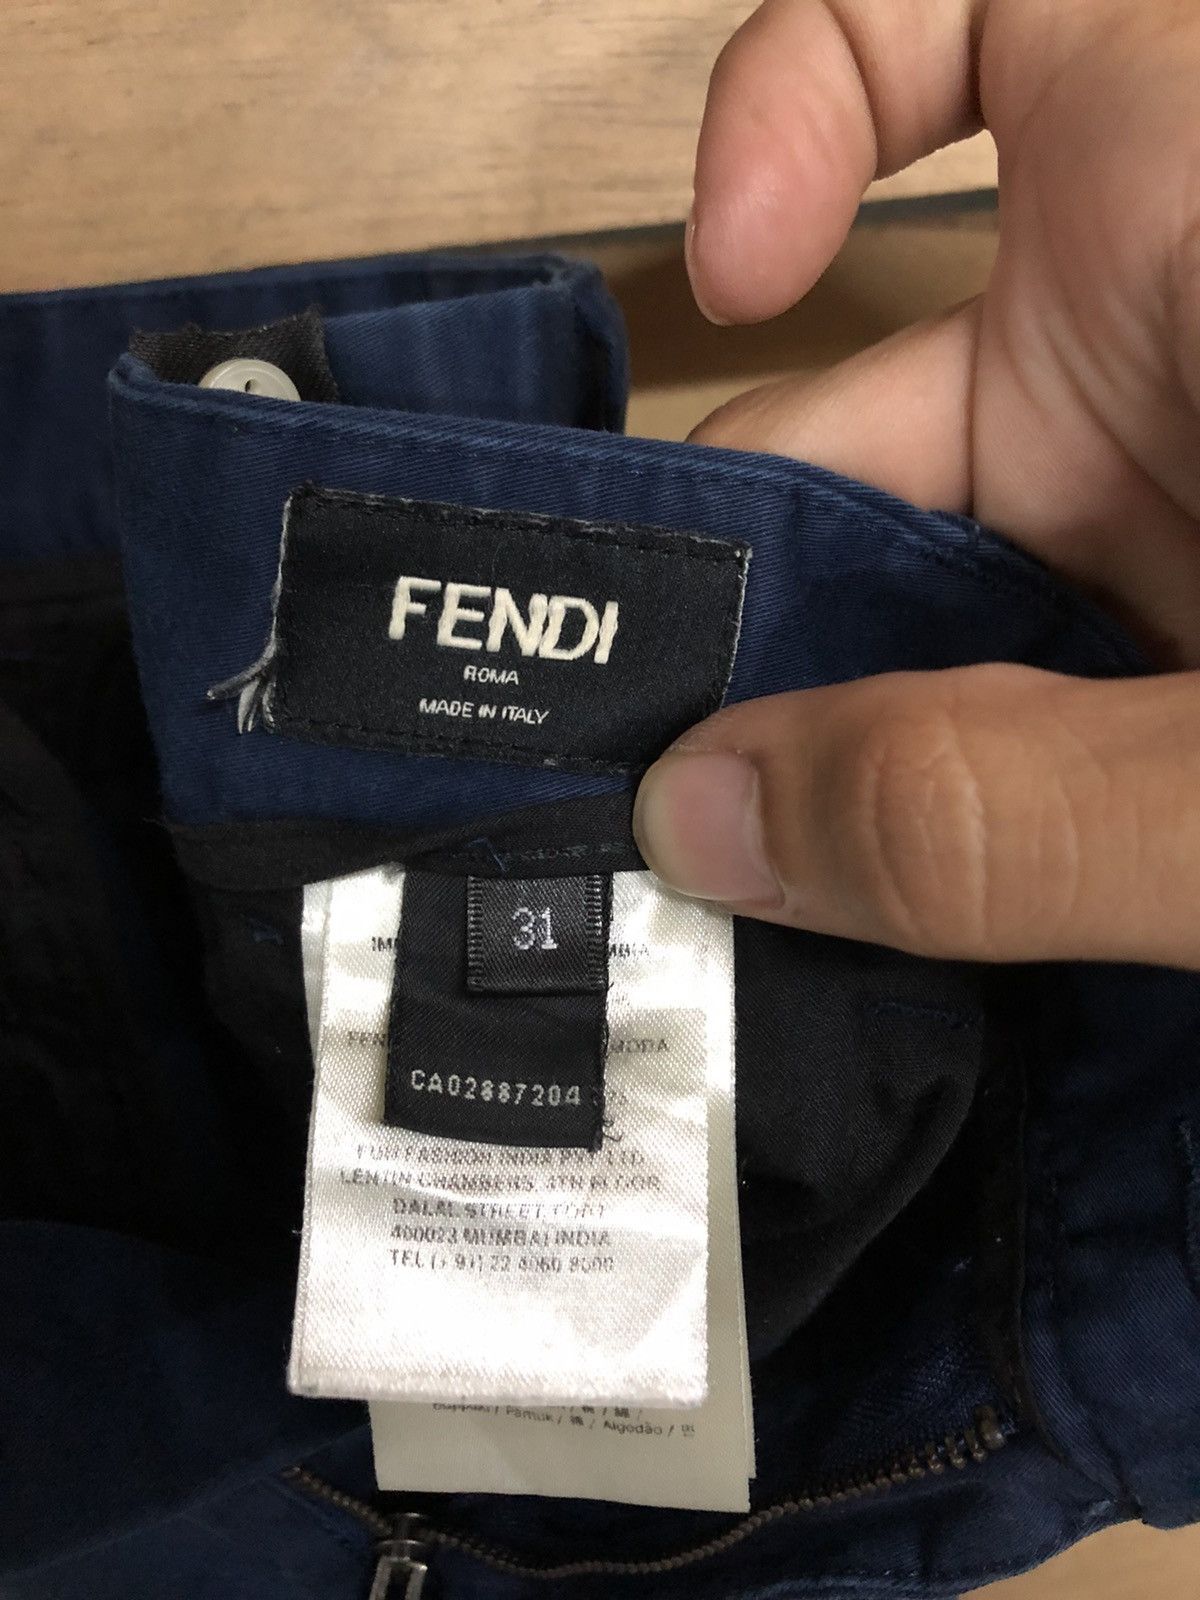 Fendi Trousers Casual Basic Logo Italy Made - 12